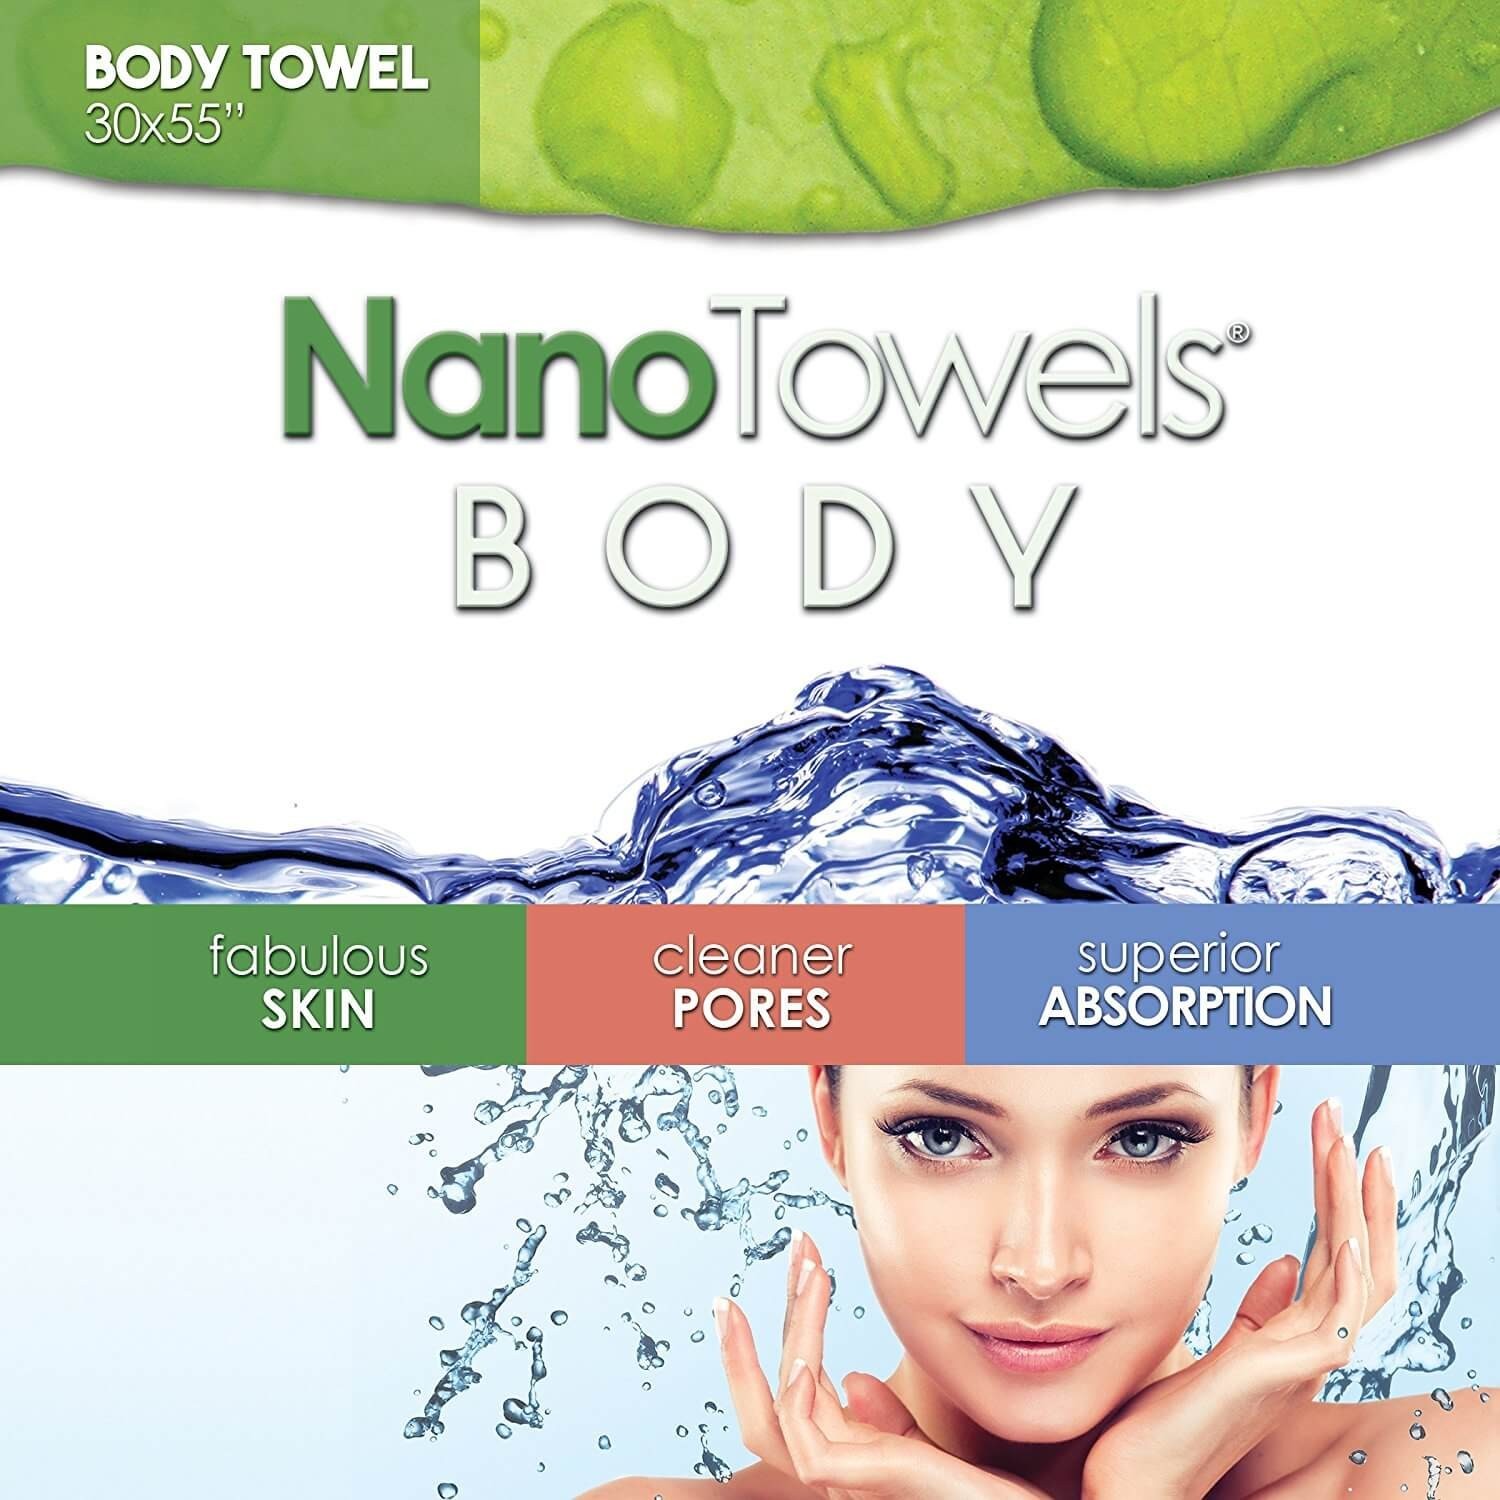 Oil Super Absorbent Nano Towels Body Bath  Shower Hair Towel Wipes Away Dirt 